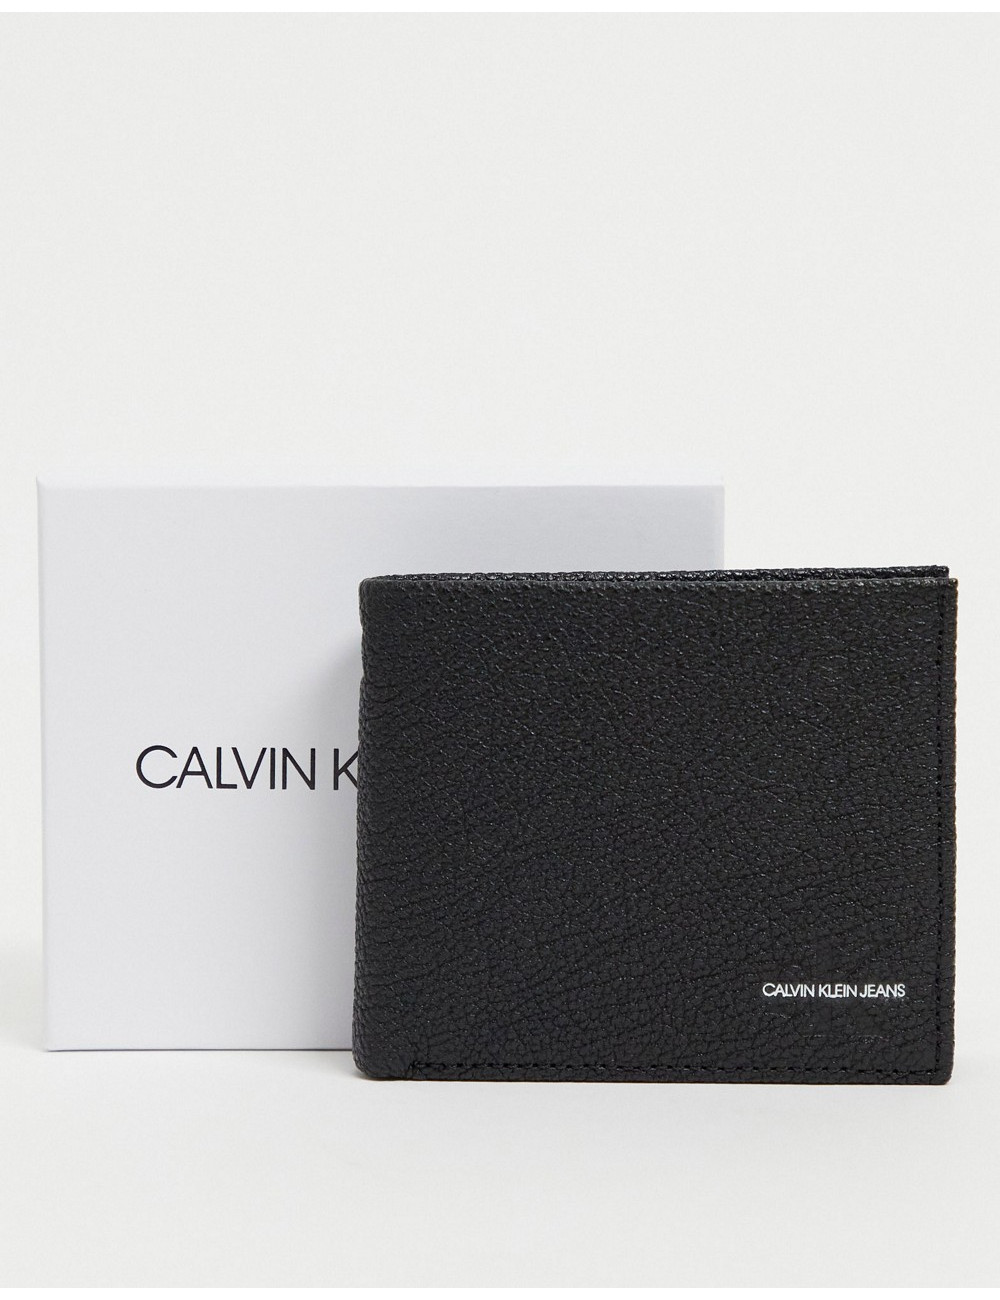 Calvin Klein Jeans bilfold...